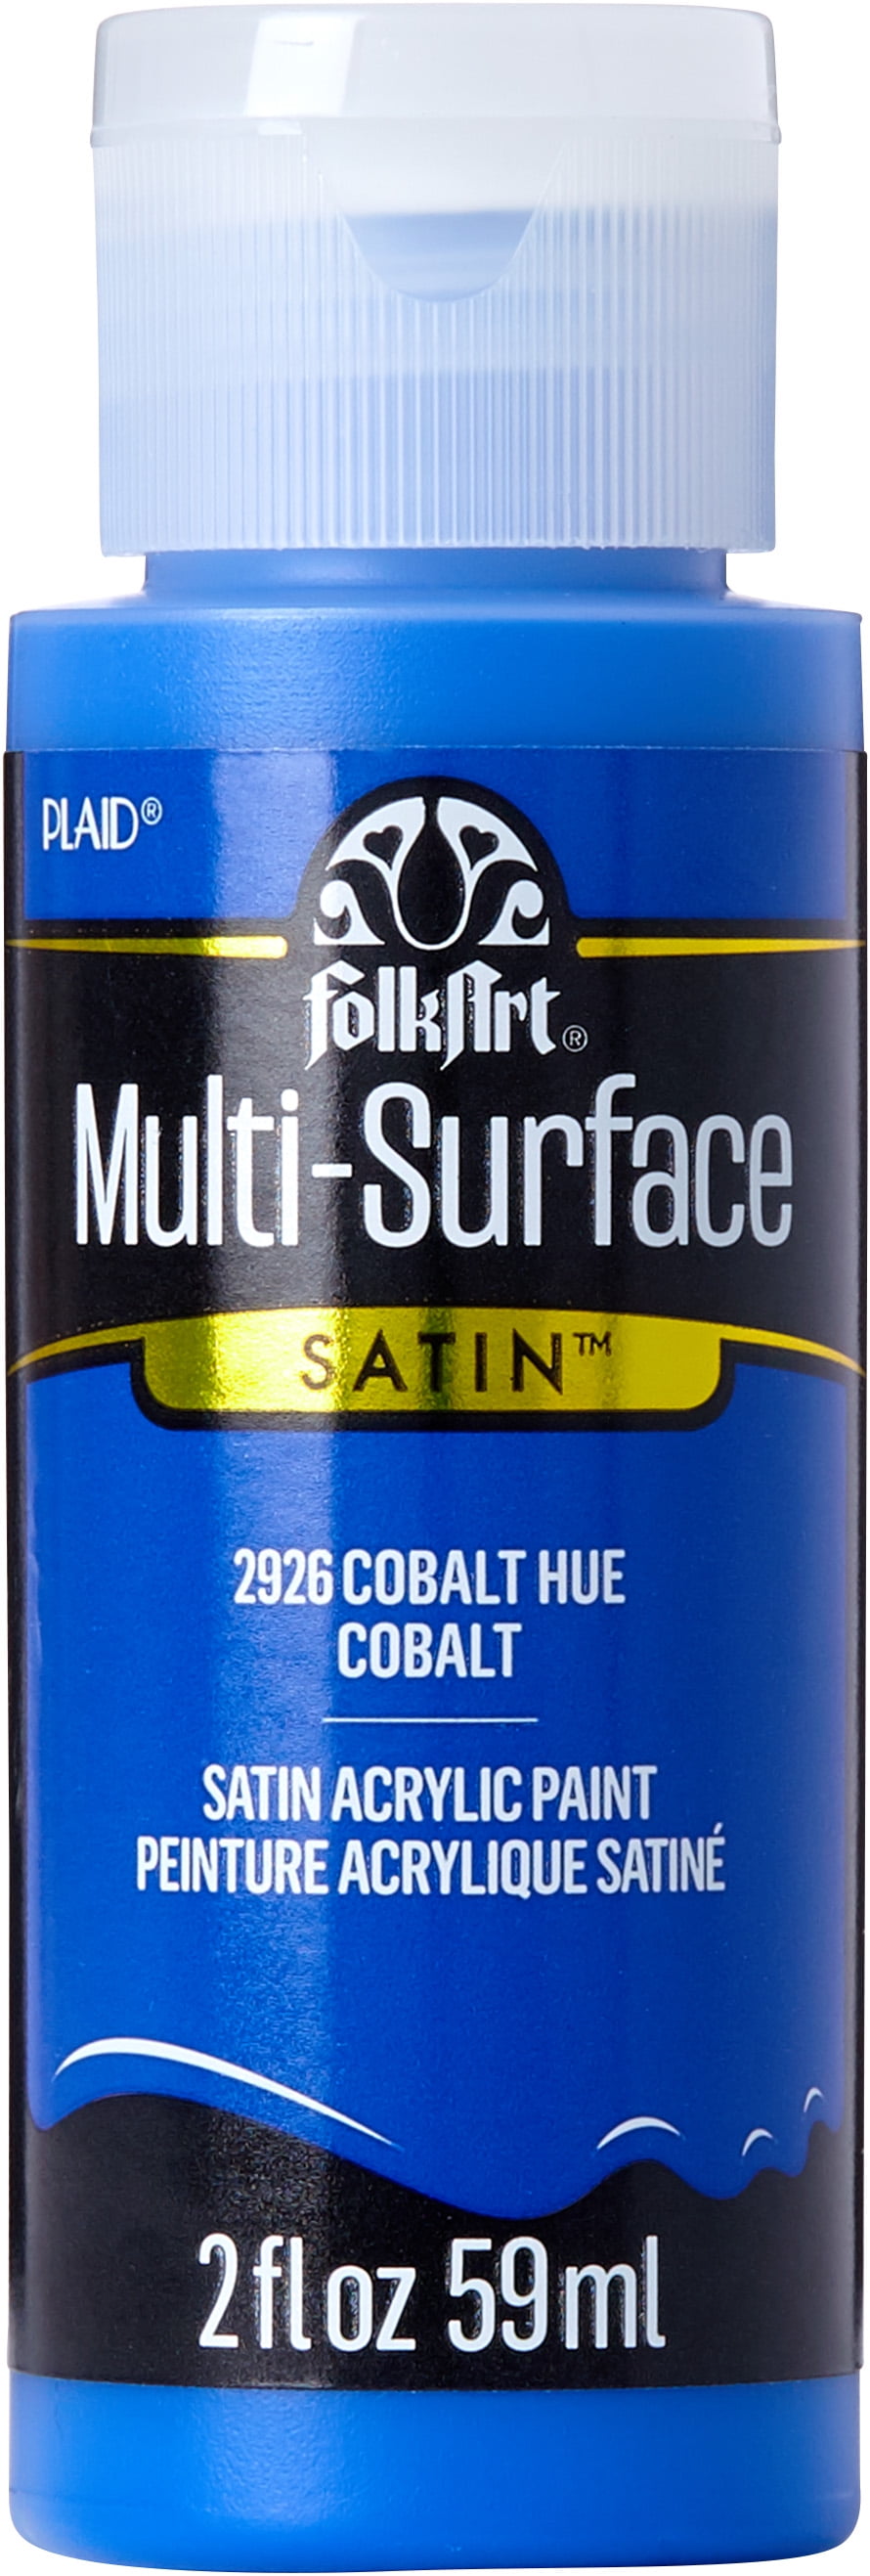 FolkArt Multi-Surface Acrylic Craft Paint, Satin Finish, Patina, 2 fl oz